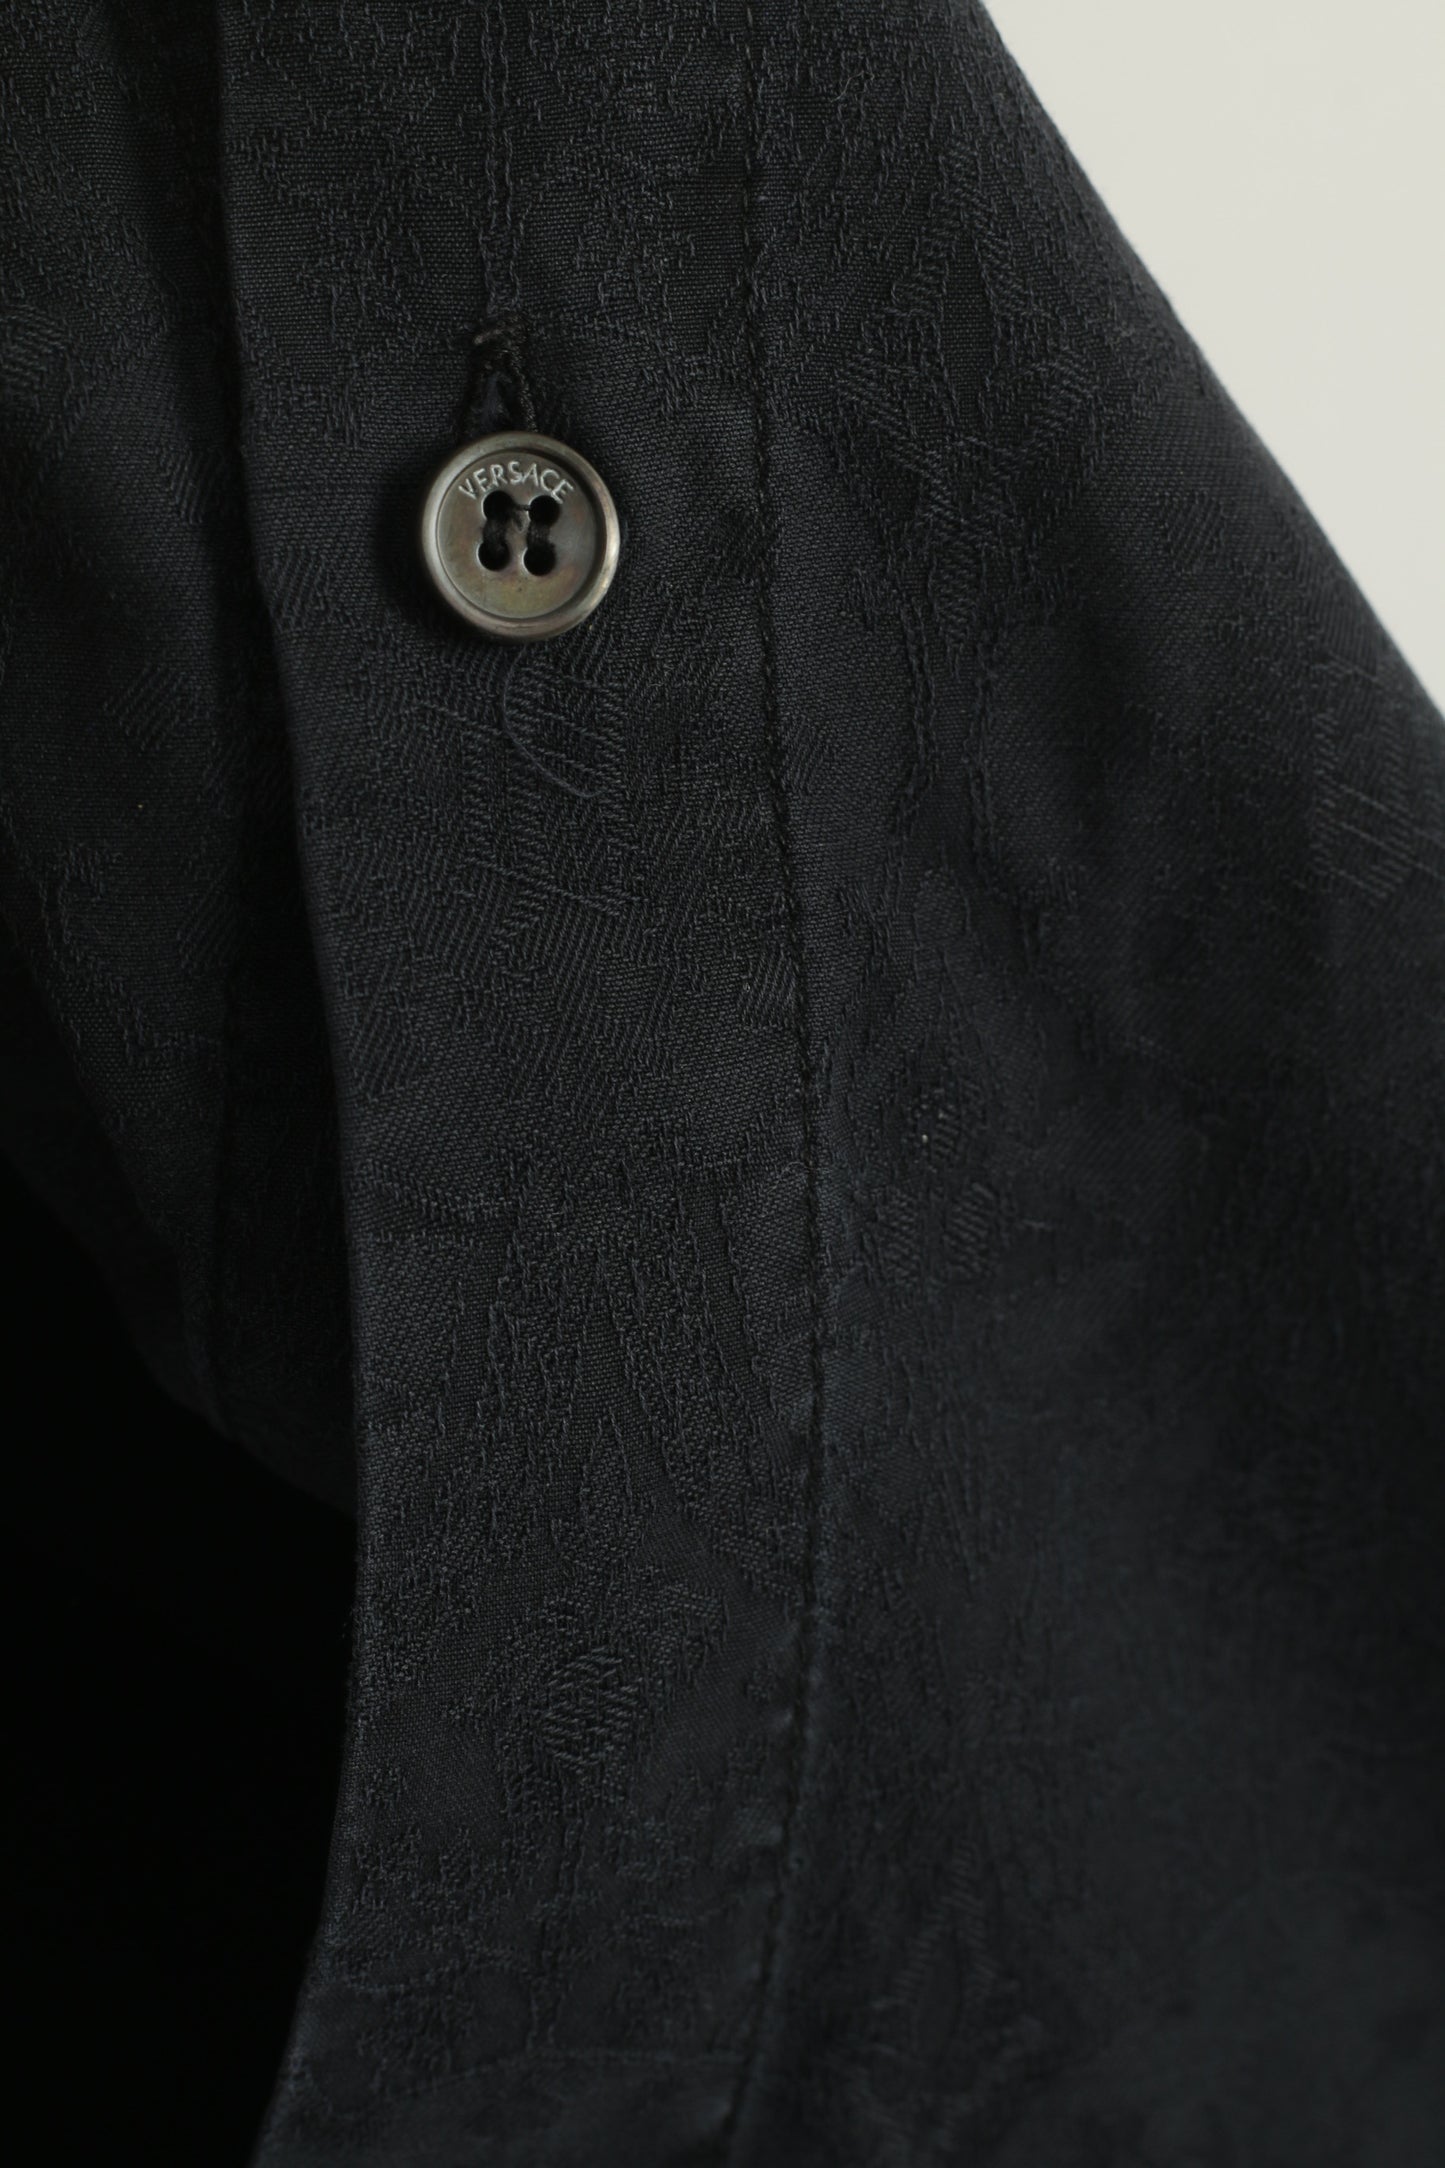 Gianni Versace Men 54 L Casual Shirt Black Cotton Vintage Long Sleeve Detailed Buttons Top